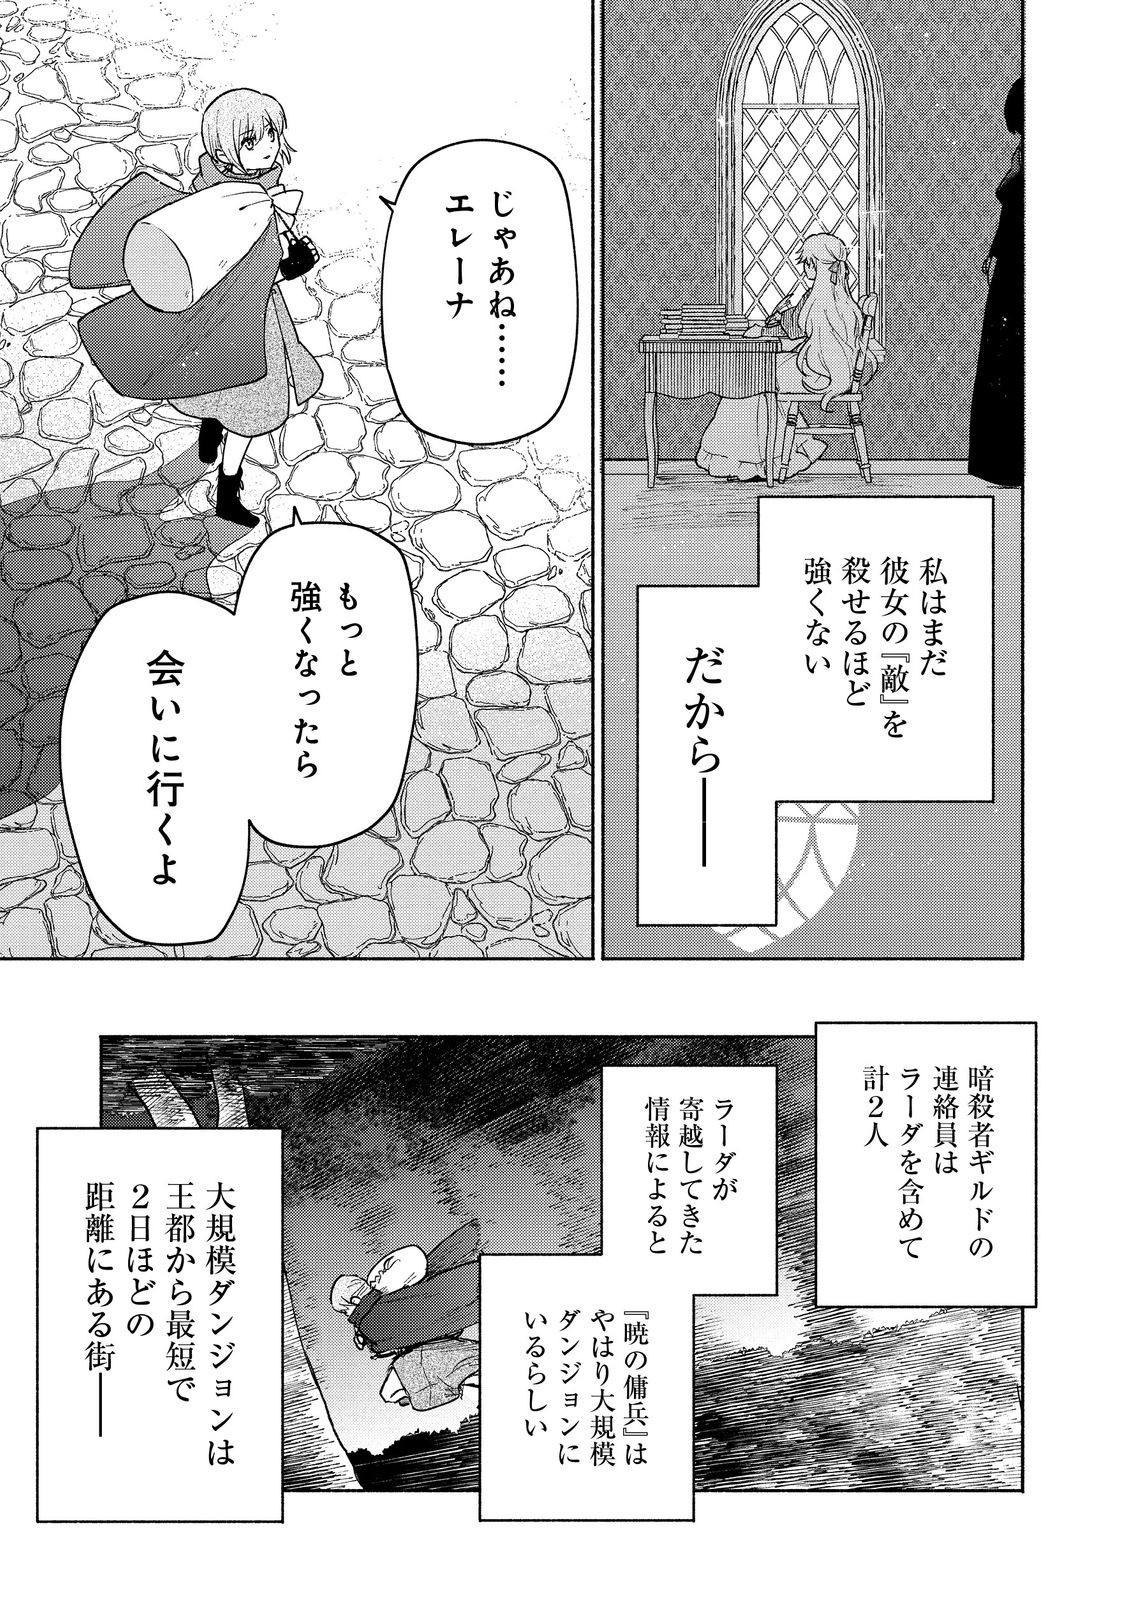 Otome Game no Heroine de Saikyou Survival - Chapter 22 - Page 35